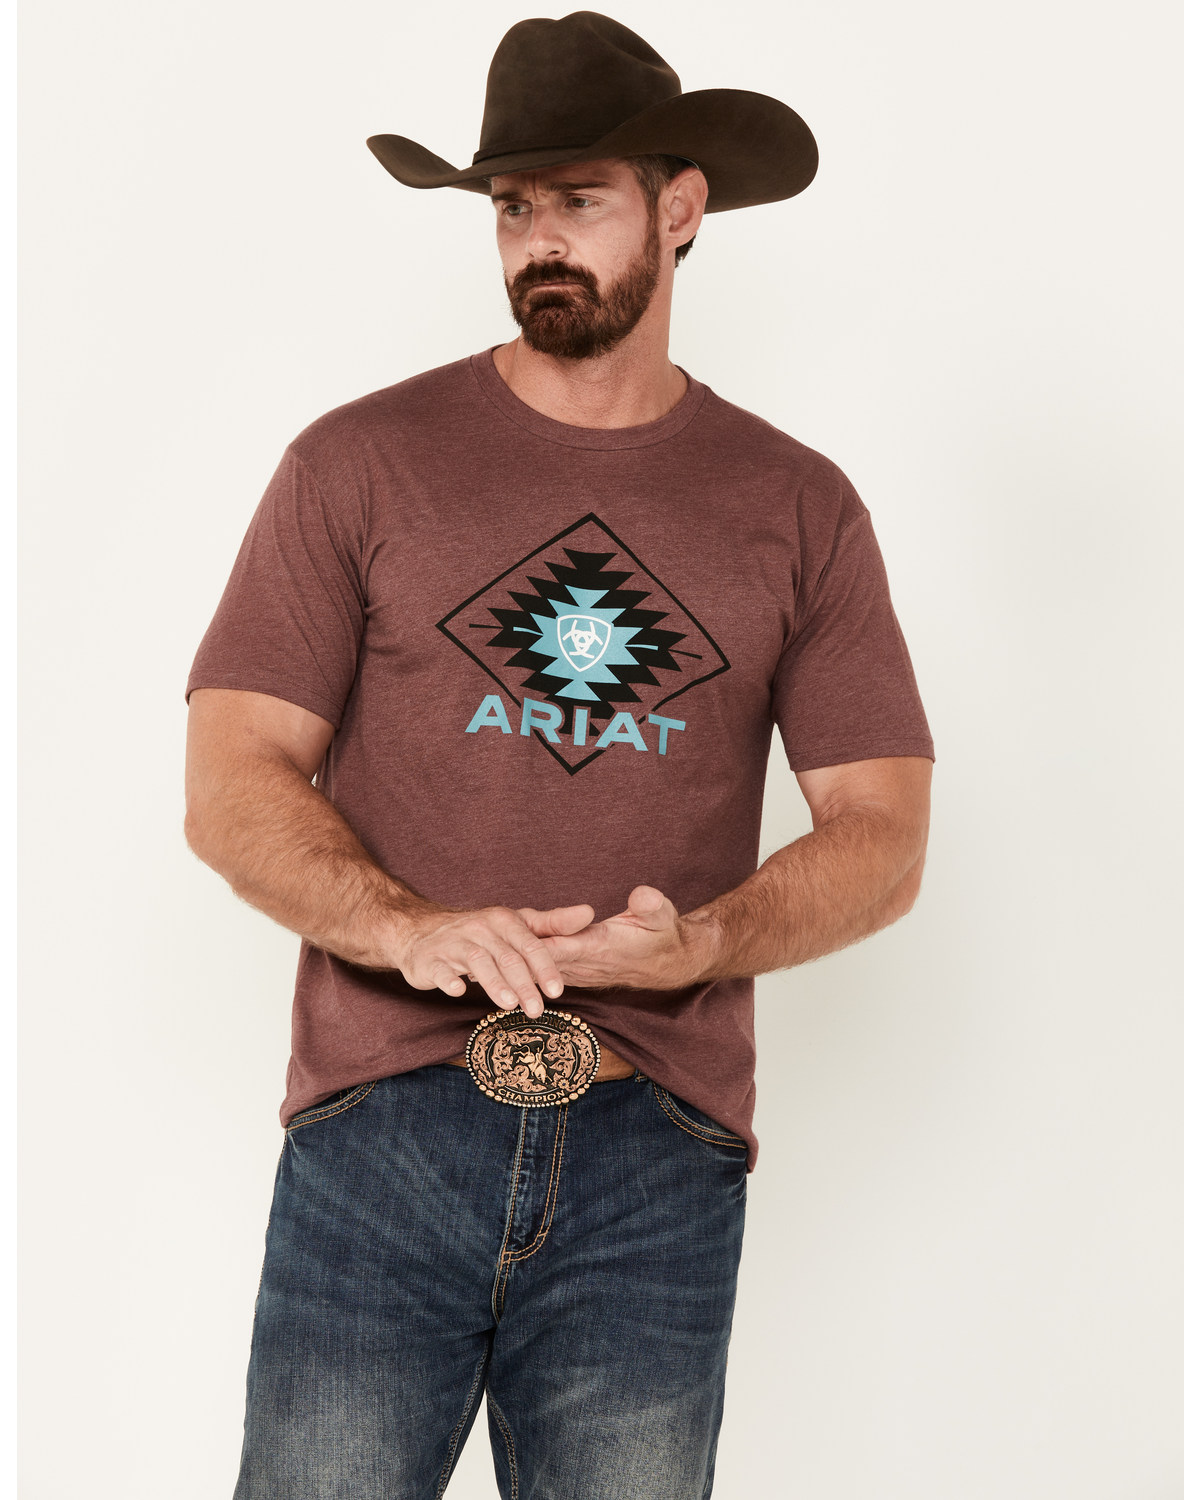 Ariat Men's Southwestern Print Short Sleeve Graphic T-Shirt